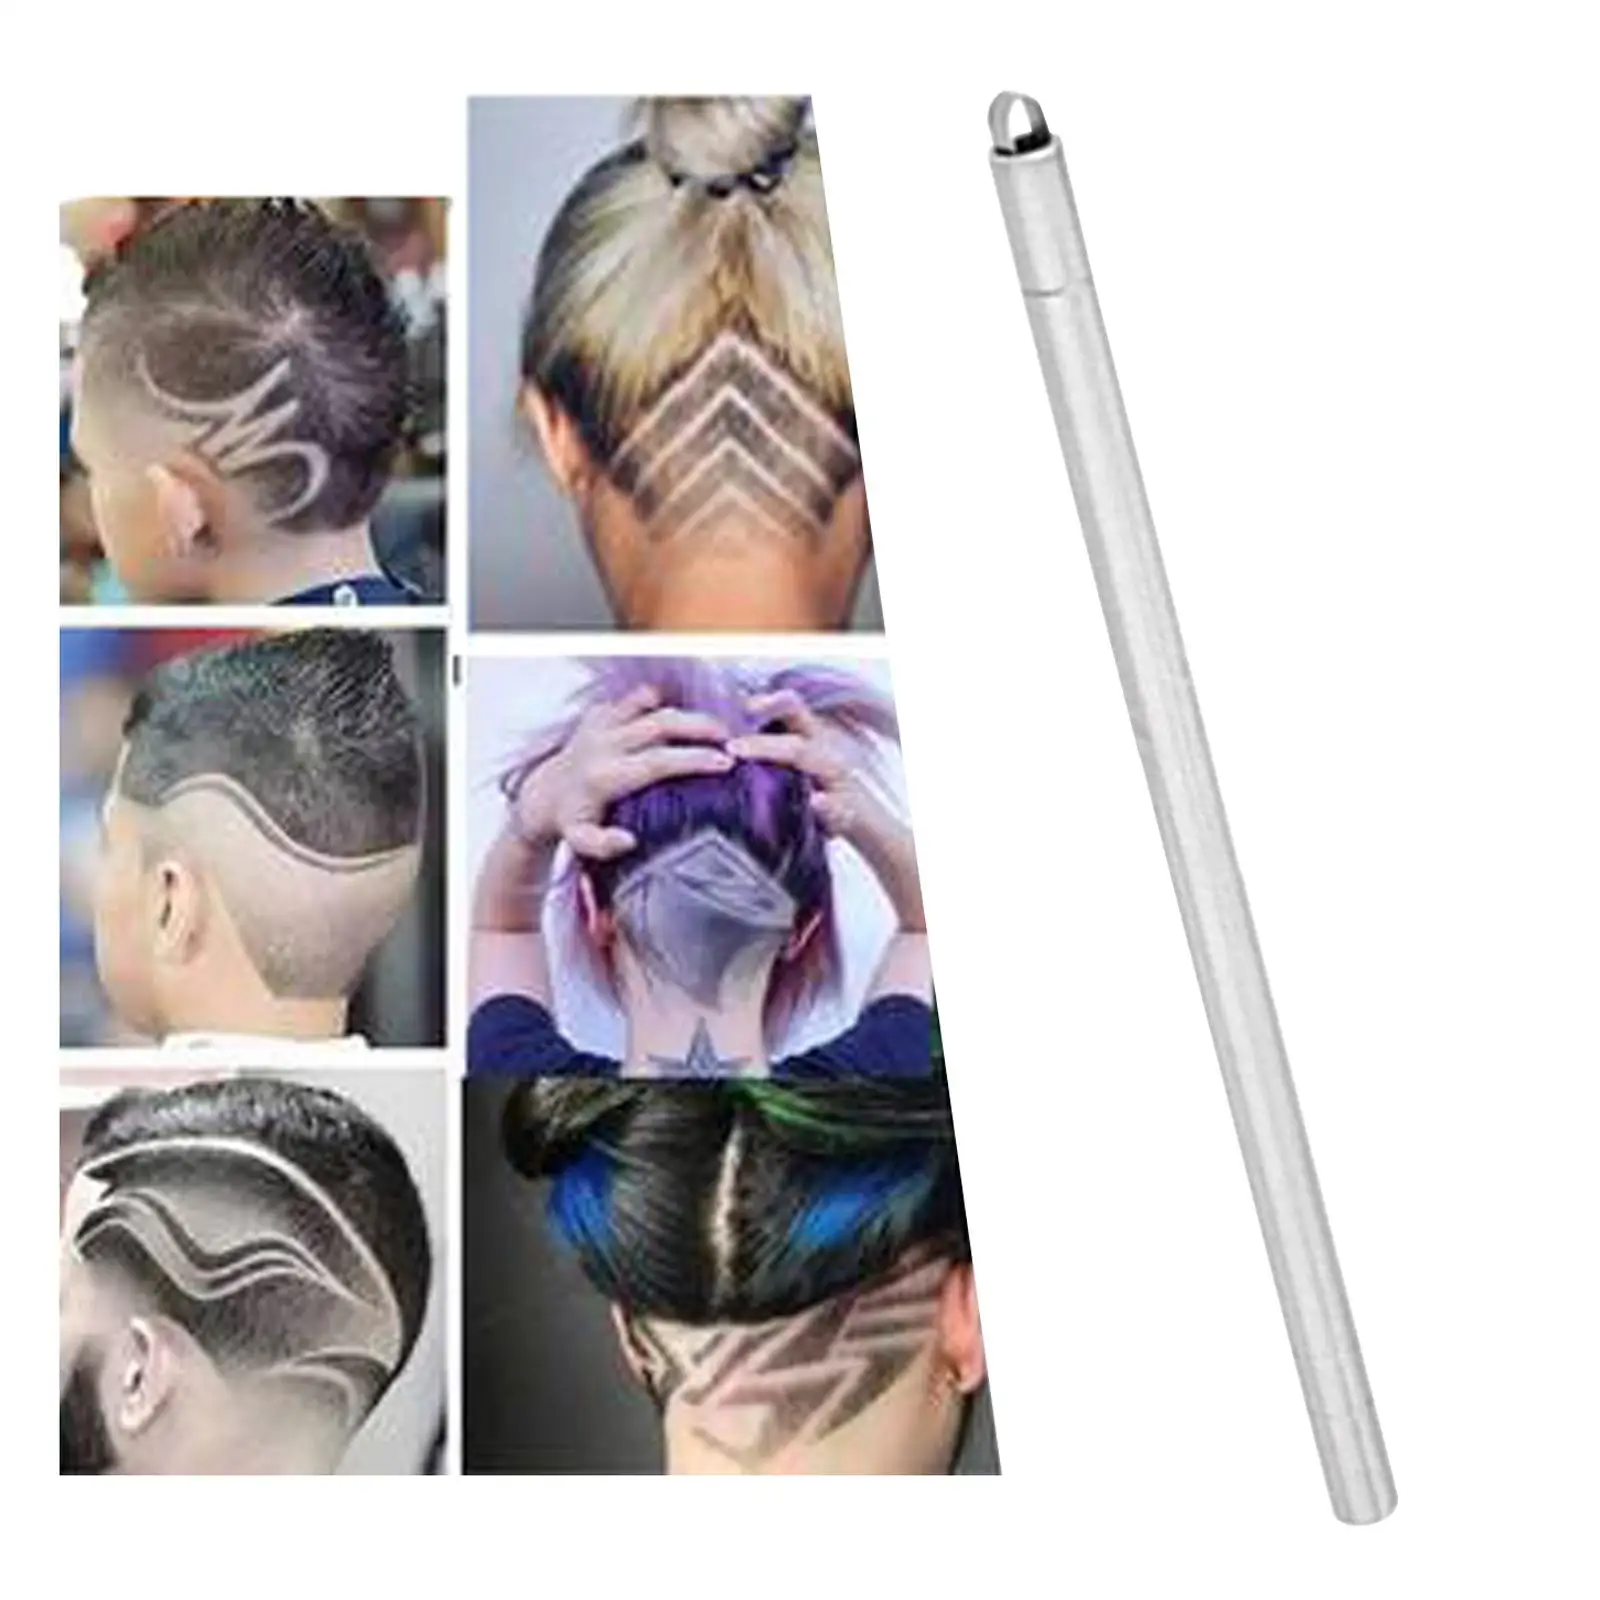 Hair Razor Pen Styling Hair Design Beards Face Tattoos Trim Engraving Pencil Barber Accessories for Men Women Shaving Tool